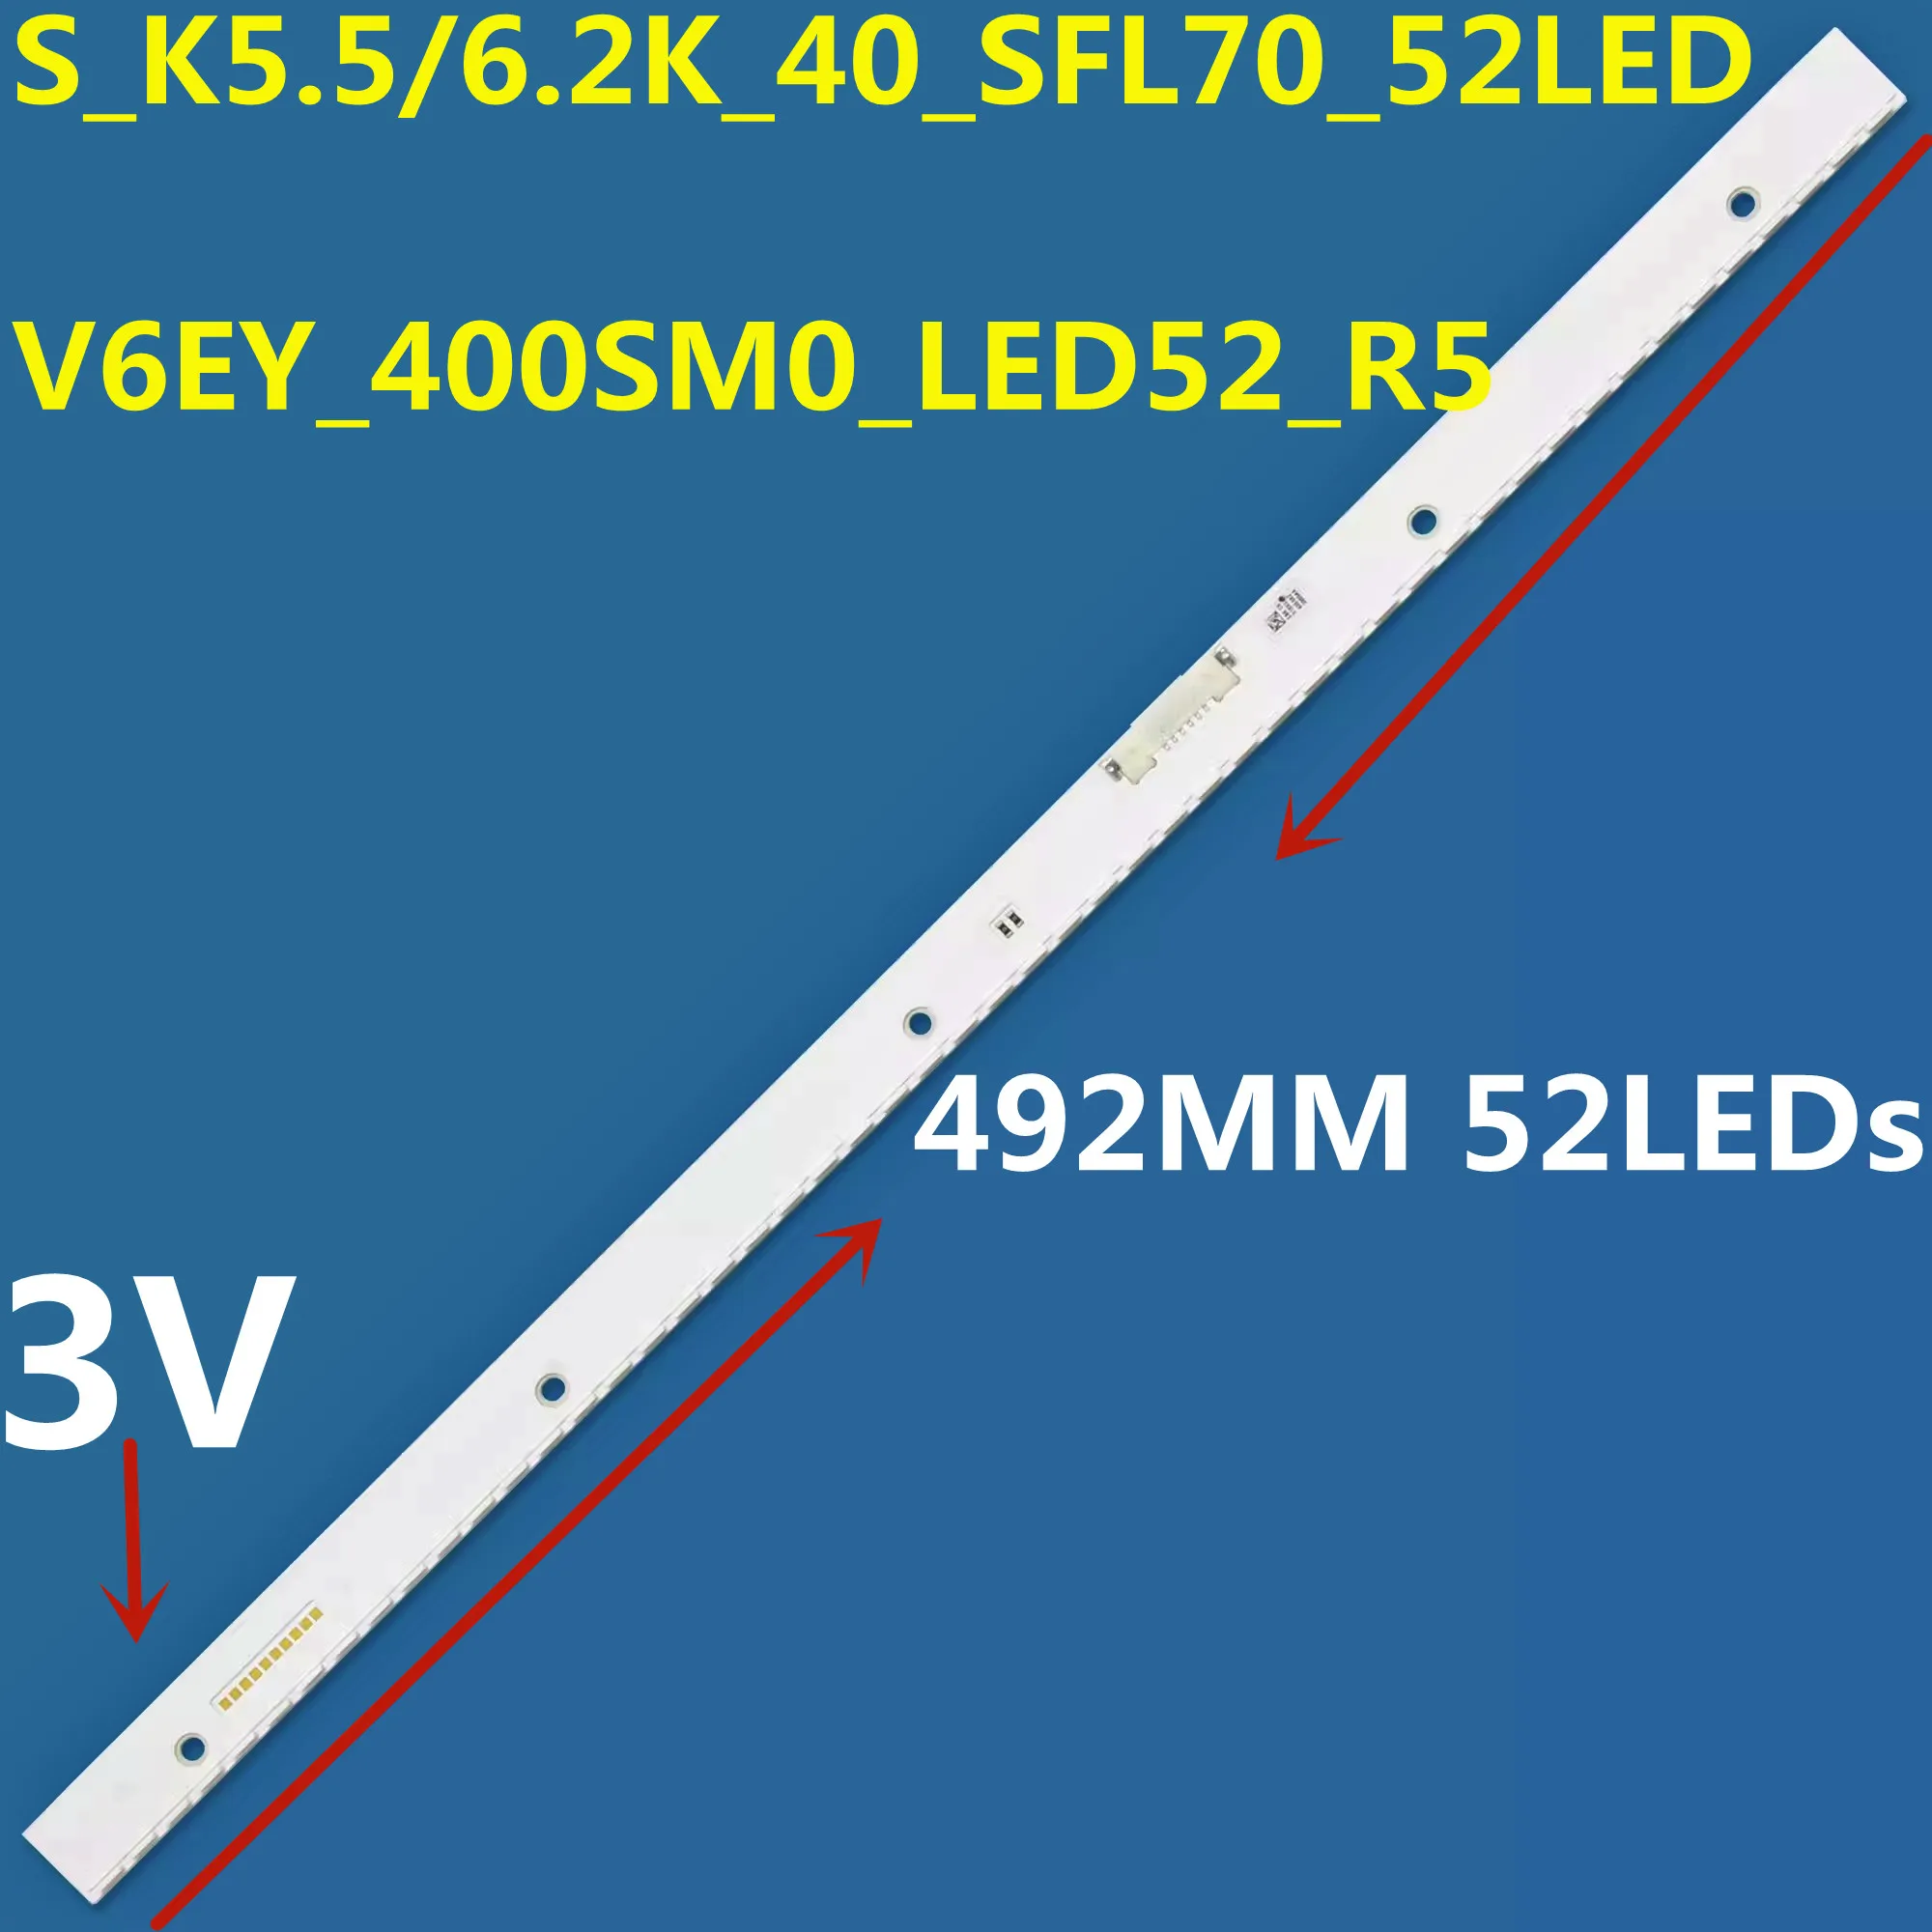 

20PCS LED Backlight Strip For V6EY_400SM0_LED52_R5 BN96-39504A UA40KC20SAJ UA40K6800AJ UN40K6250 UN40K6500 CY-VK040BGLV3H